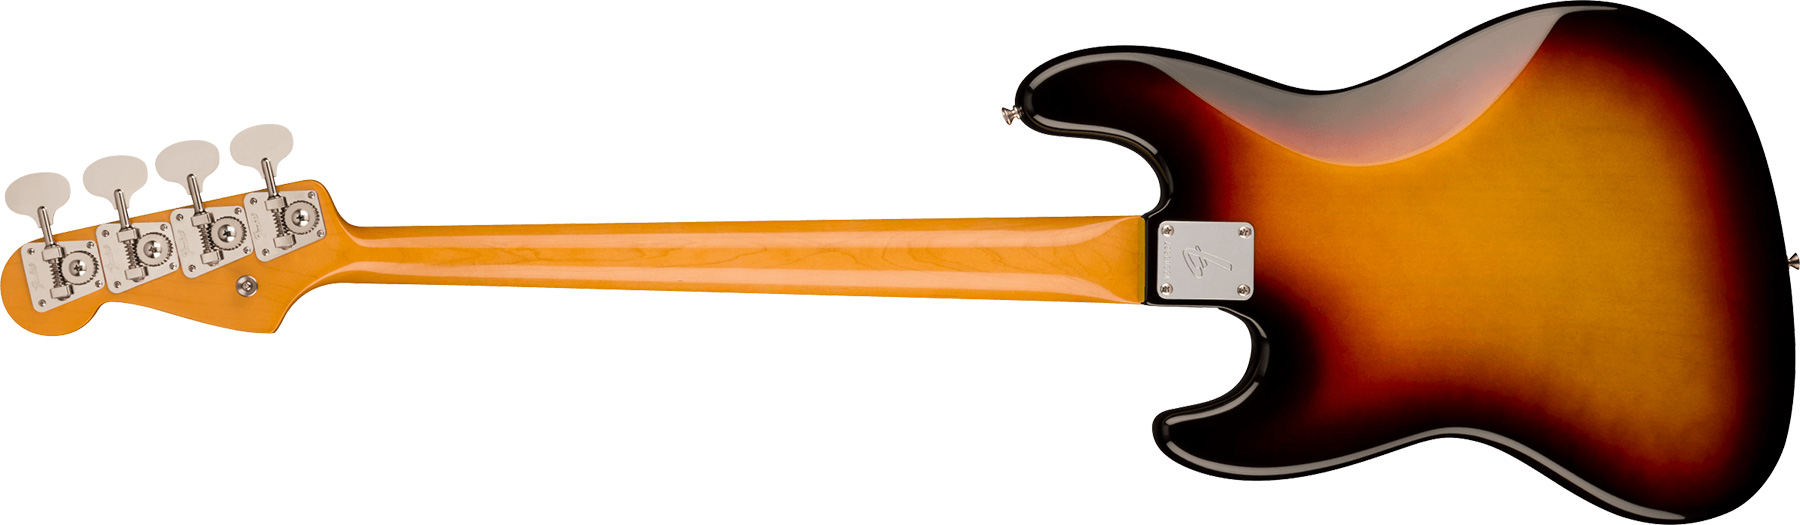 Fender Jazz Bass 1966 American Vintage Ii Usa Rw - 3-color Sunburst - Solid body elektrische bas - Variation 1